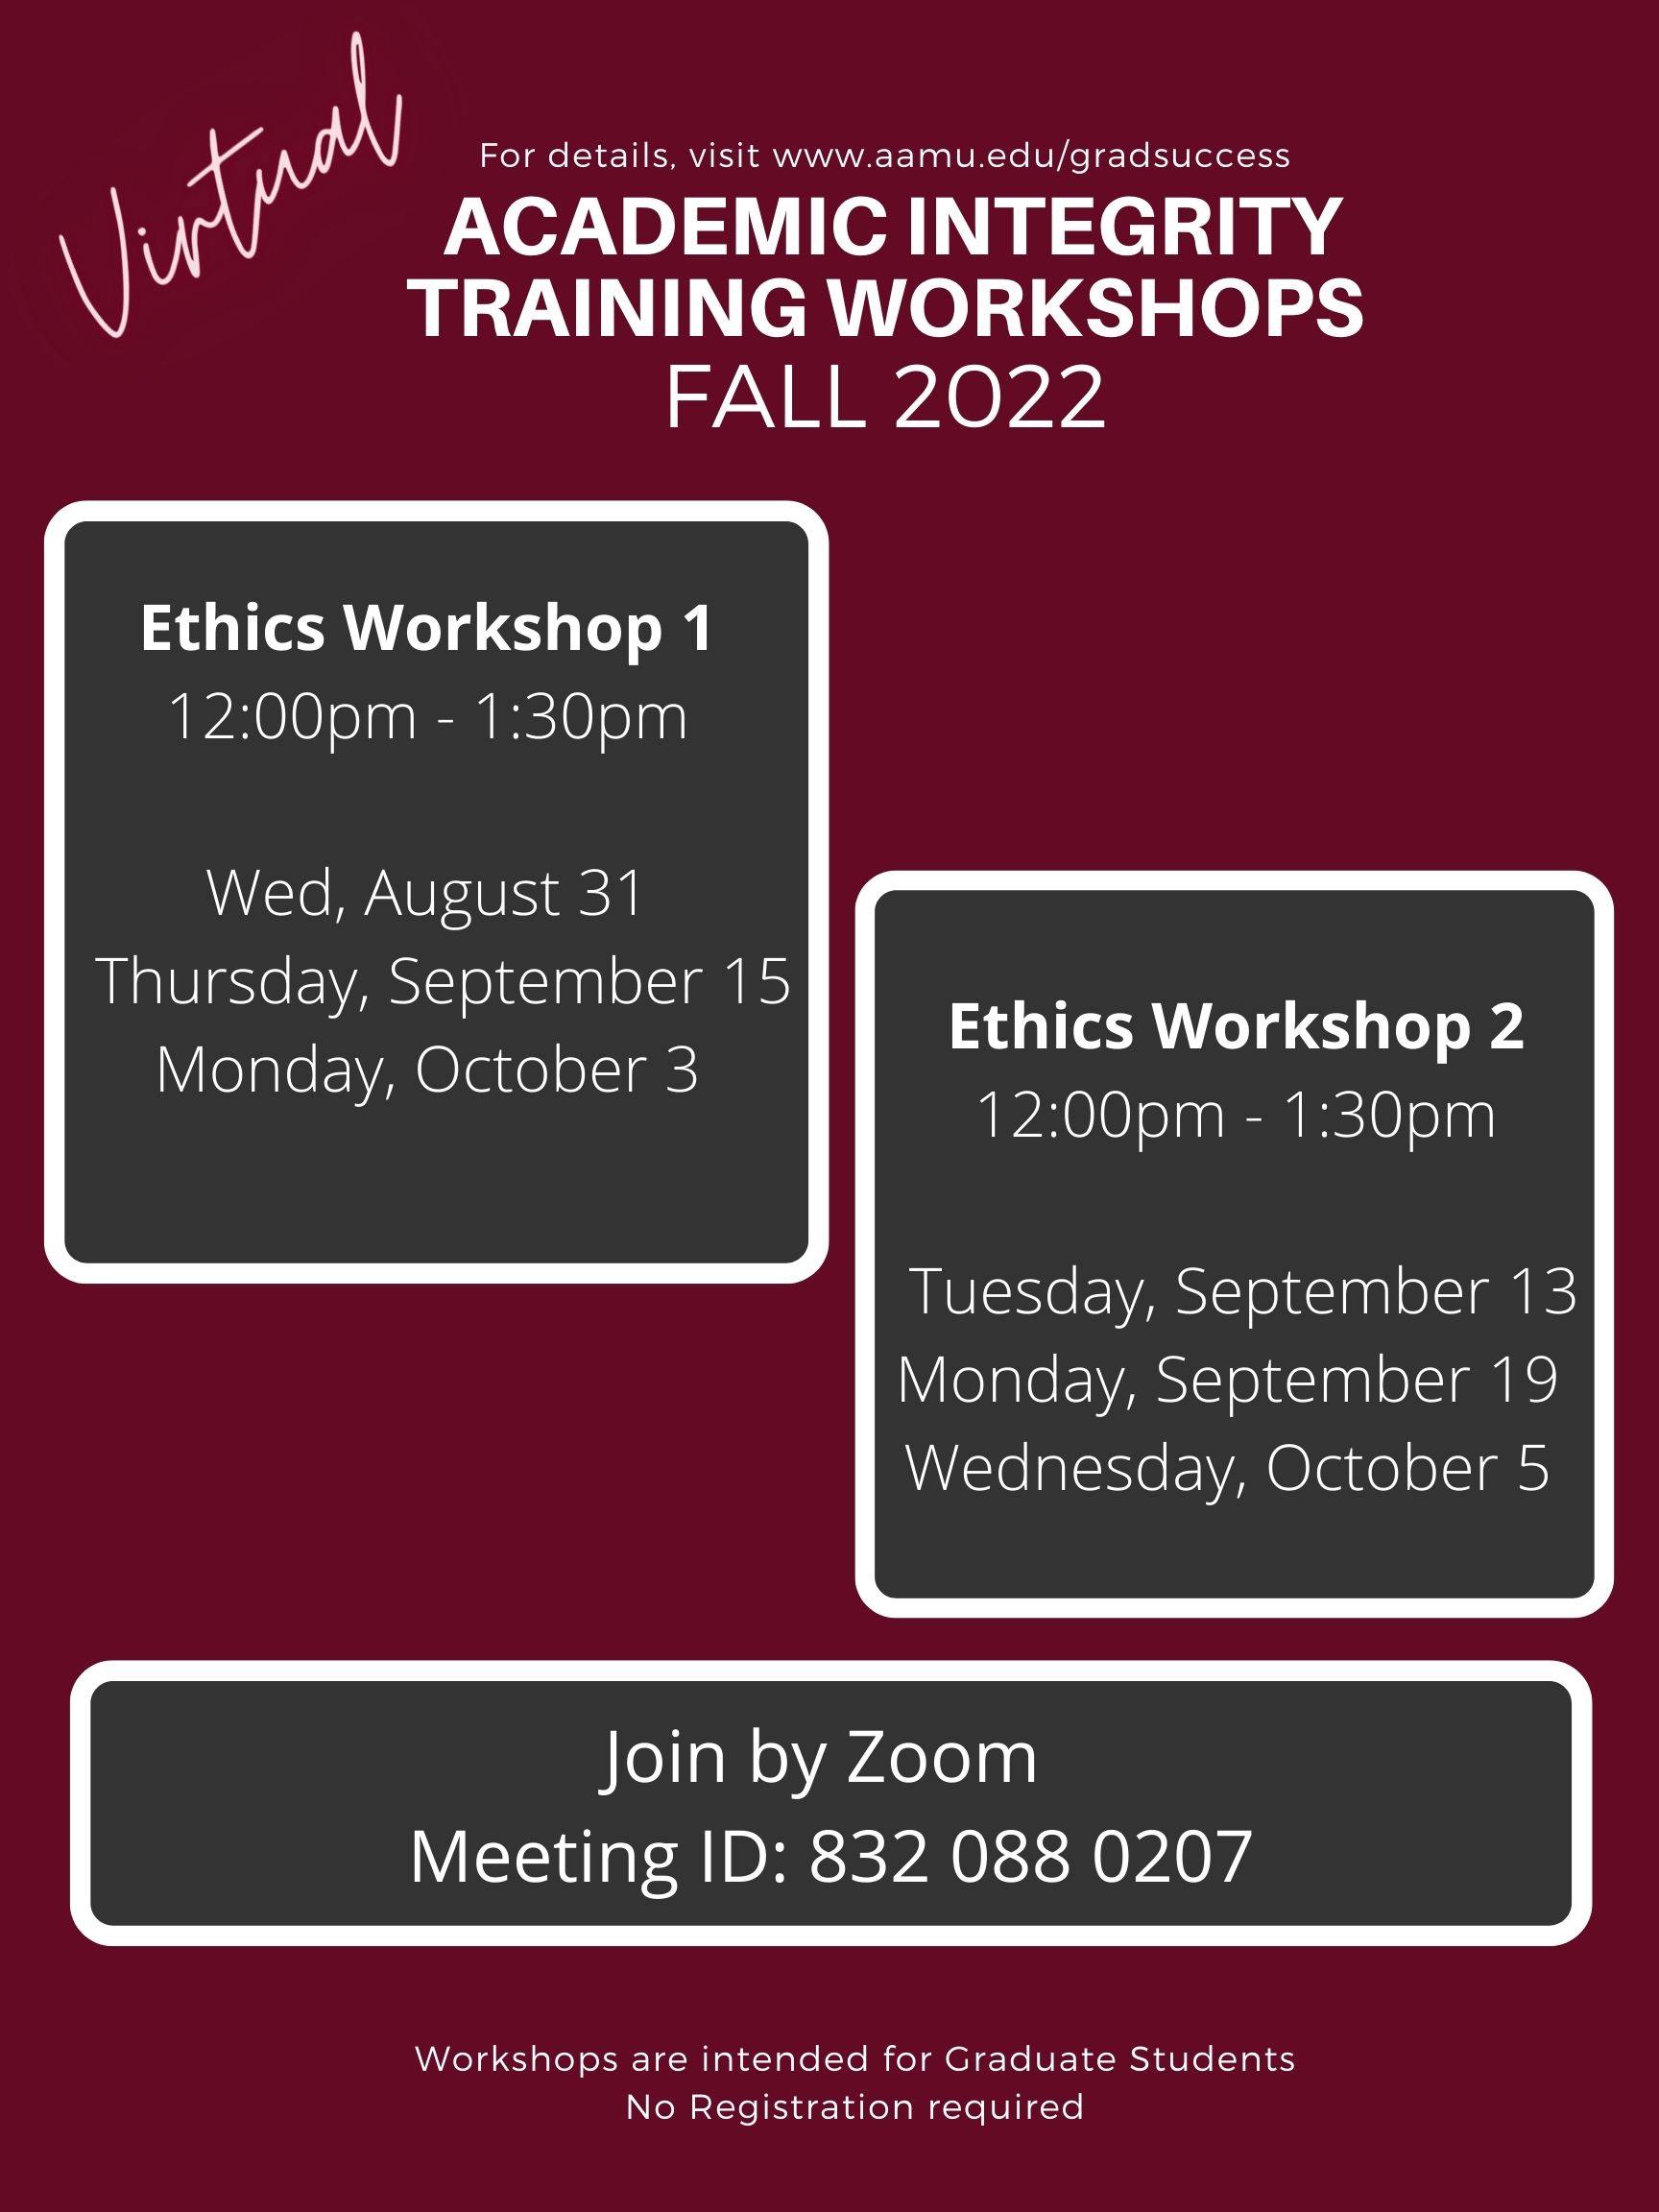 Fall 2022 Academic Integrity Training Workshops